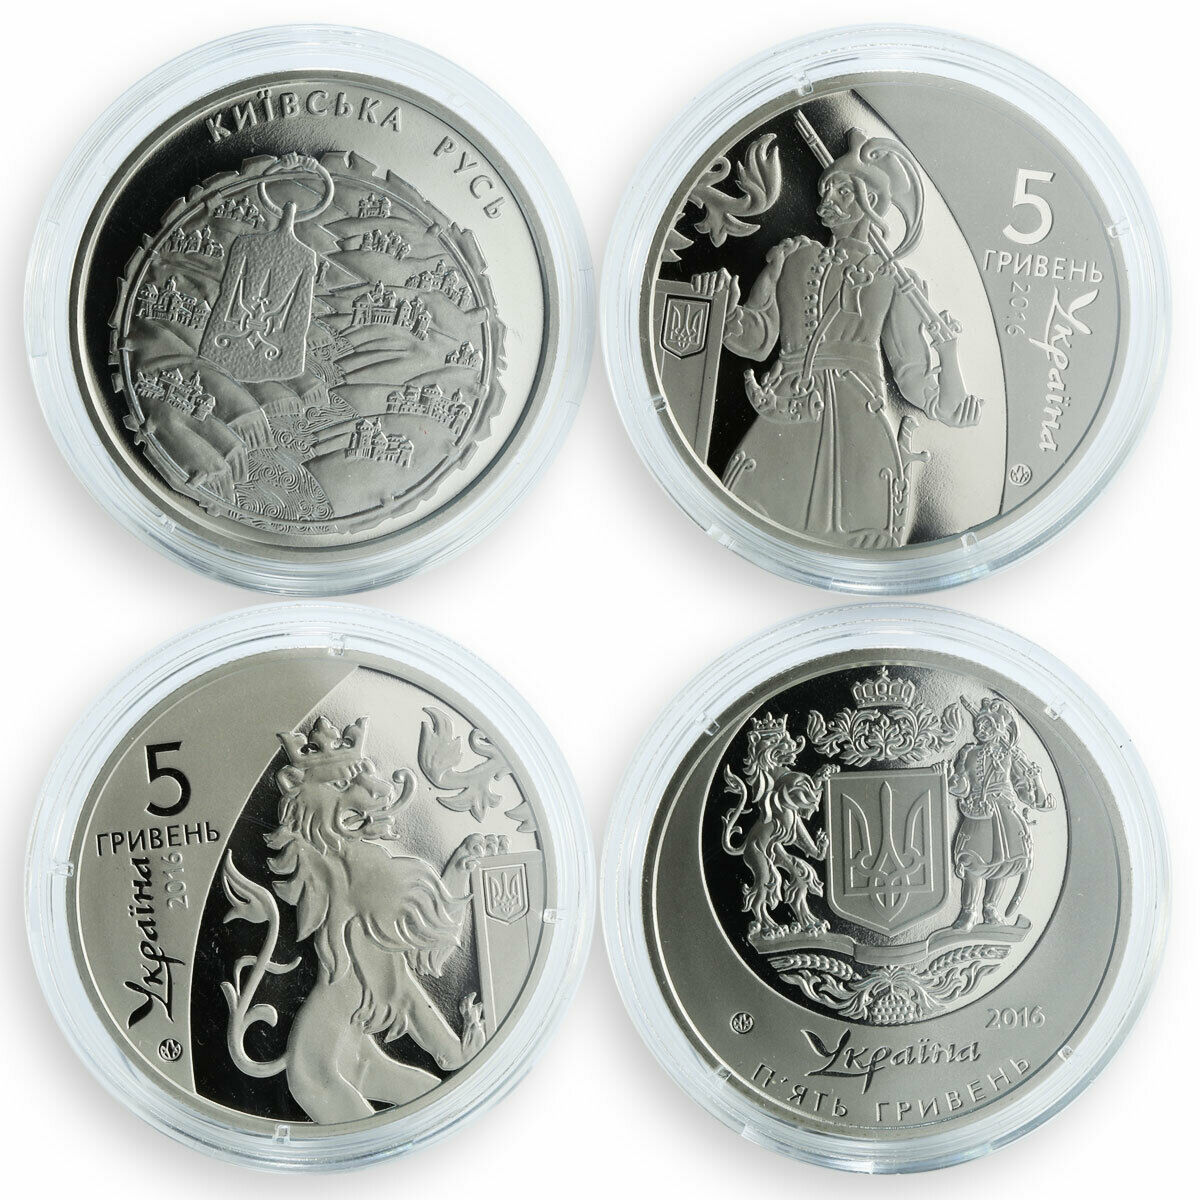 Ukraine 5 hryvnia set of 4 coins 25 Years of Independence of Ukraine 2016